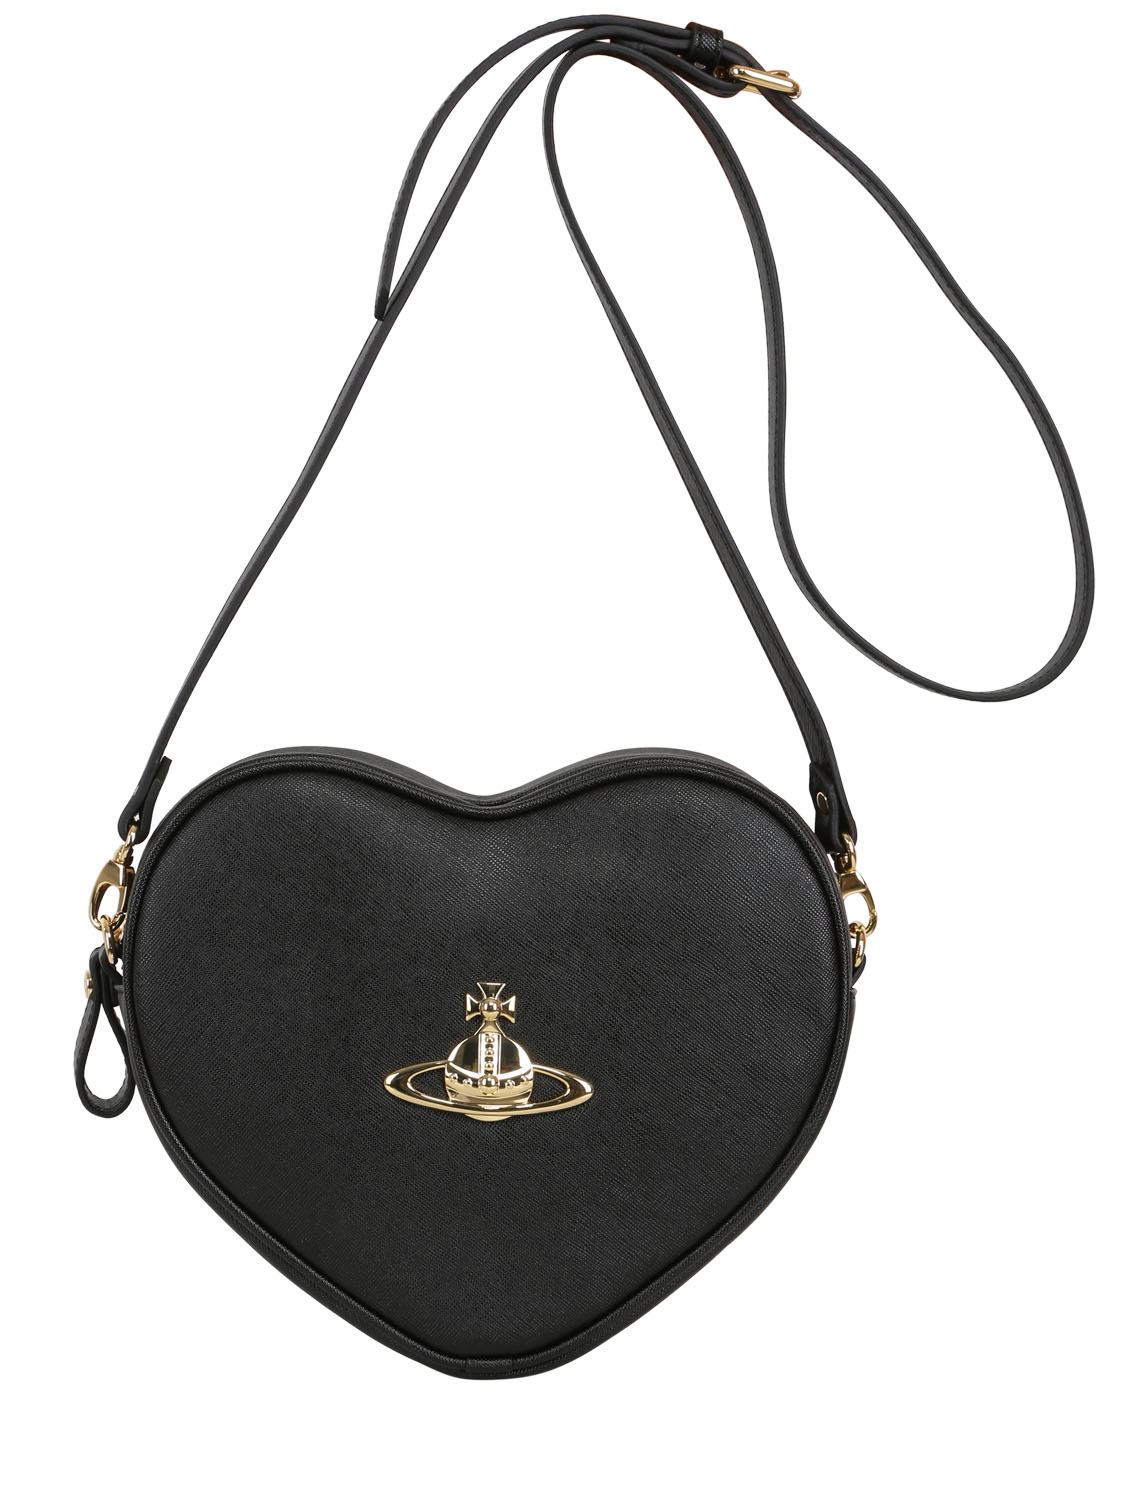 Lyst - Vivienne Westwood Divina Heart Saffiano Faux Leather Bag in Black